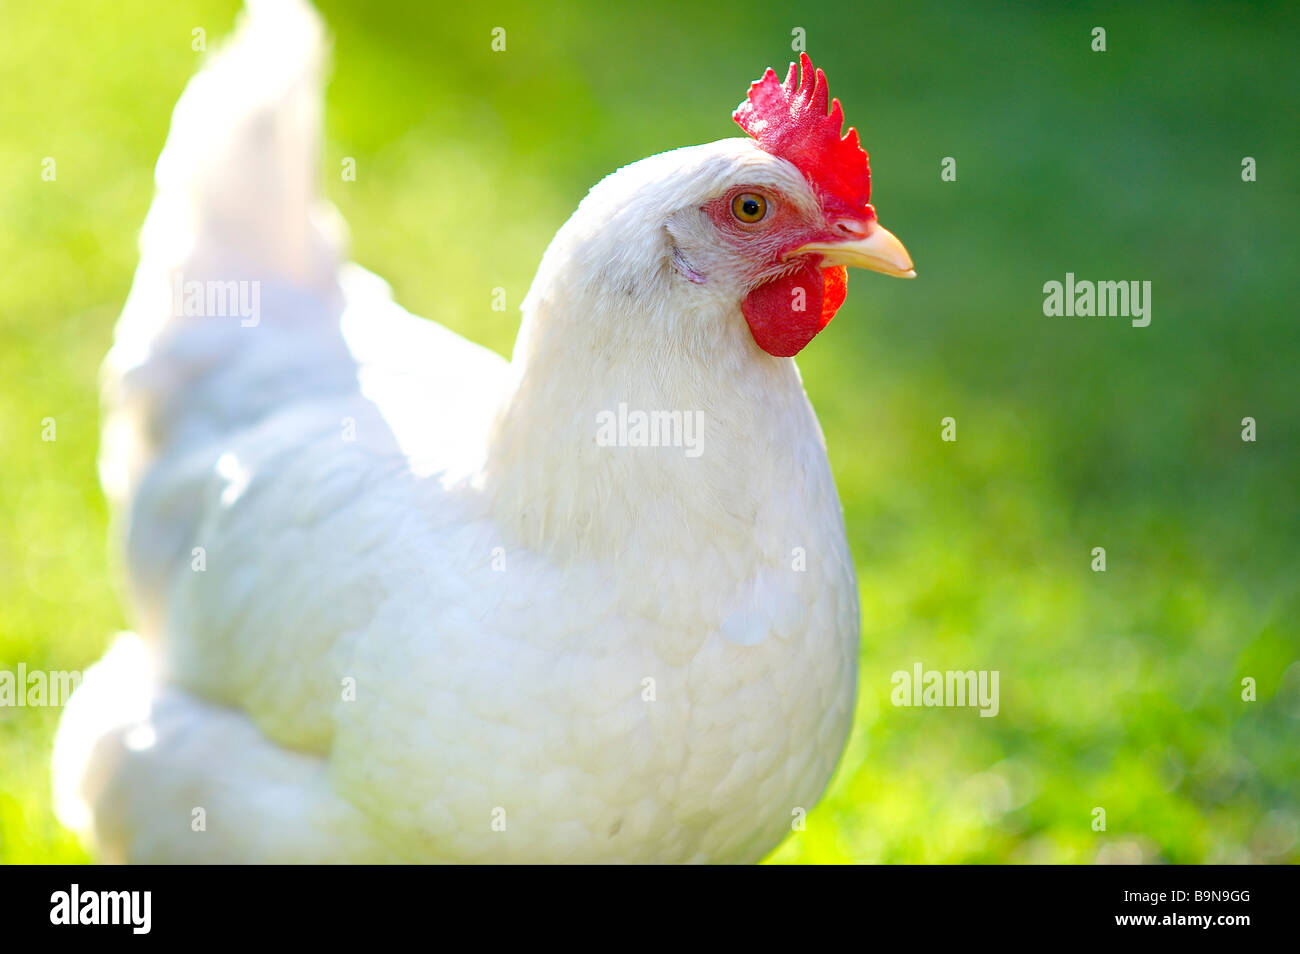 Free Range hen on grass Banque D'Images